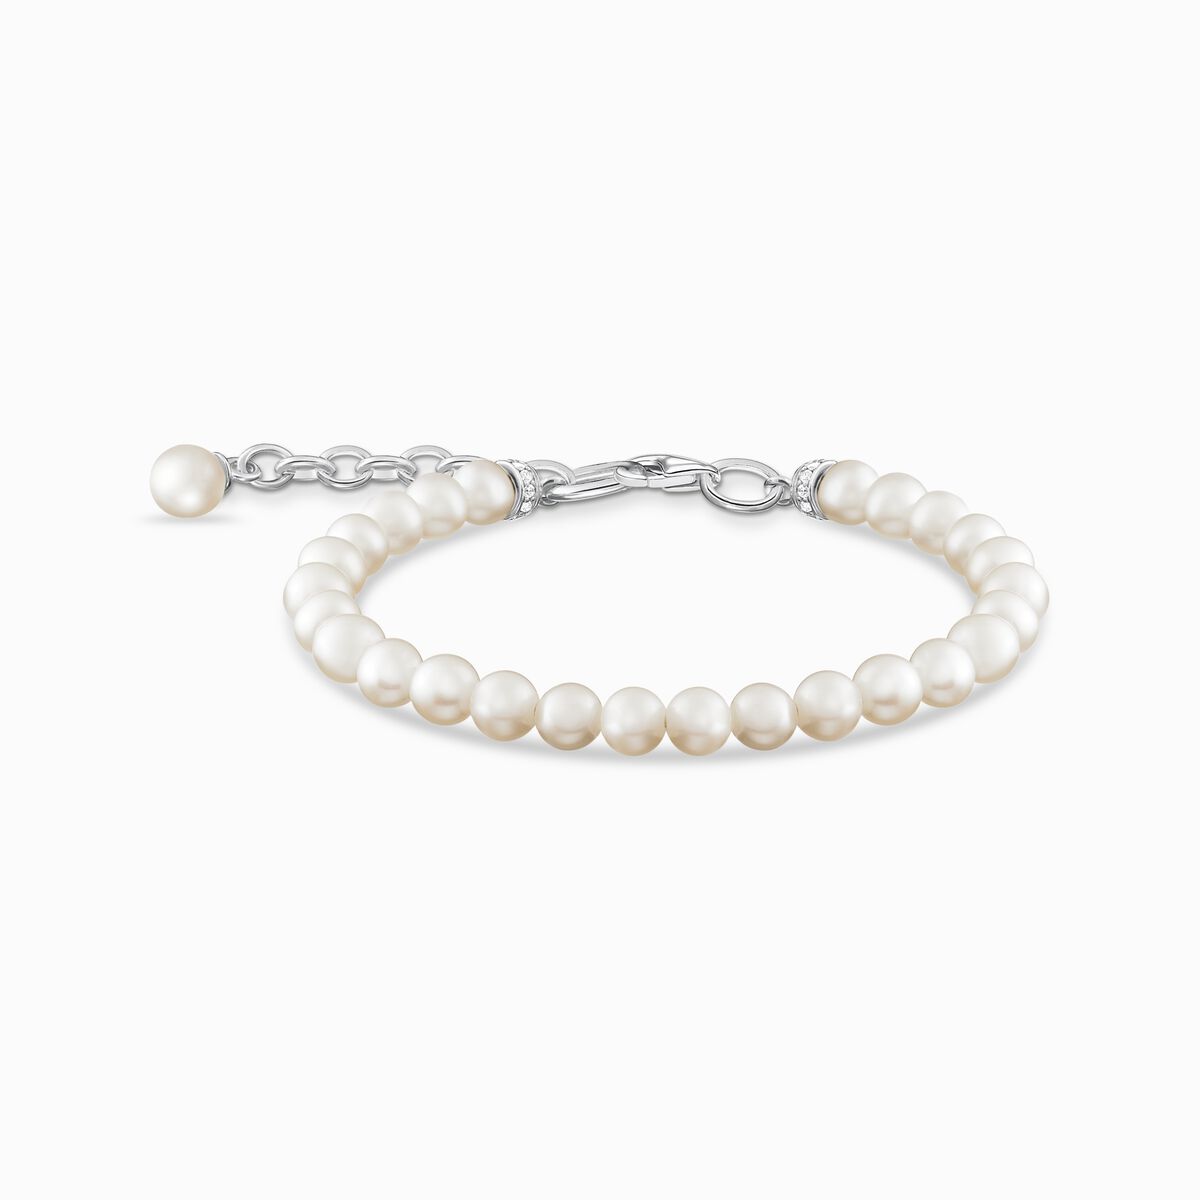 Thomas Sabo Bracelet Pearls Silver